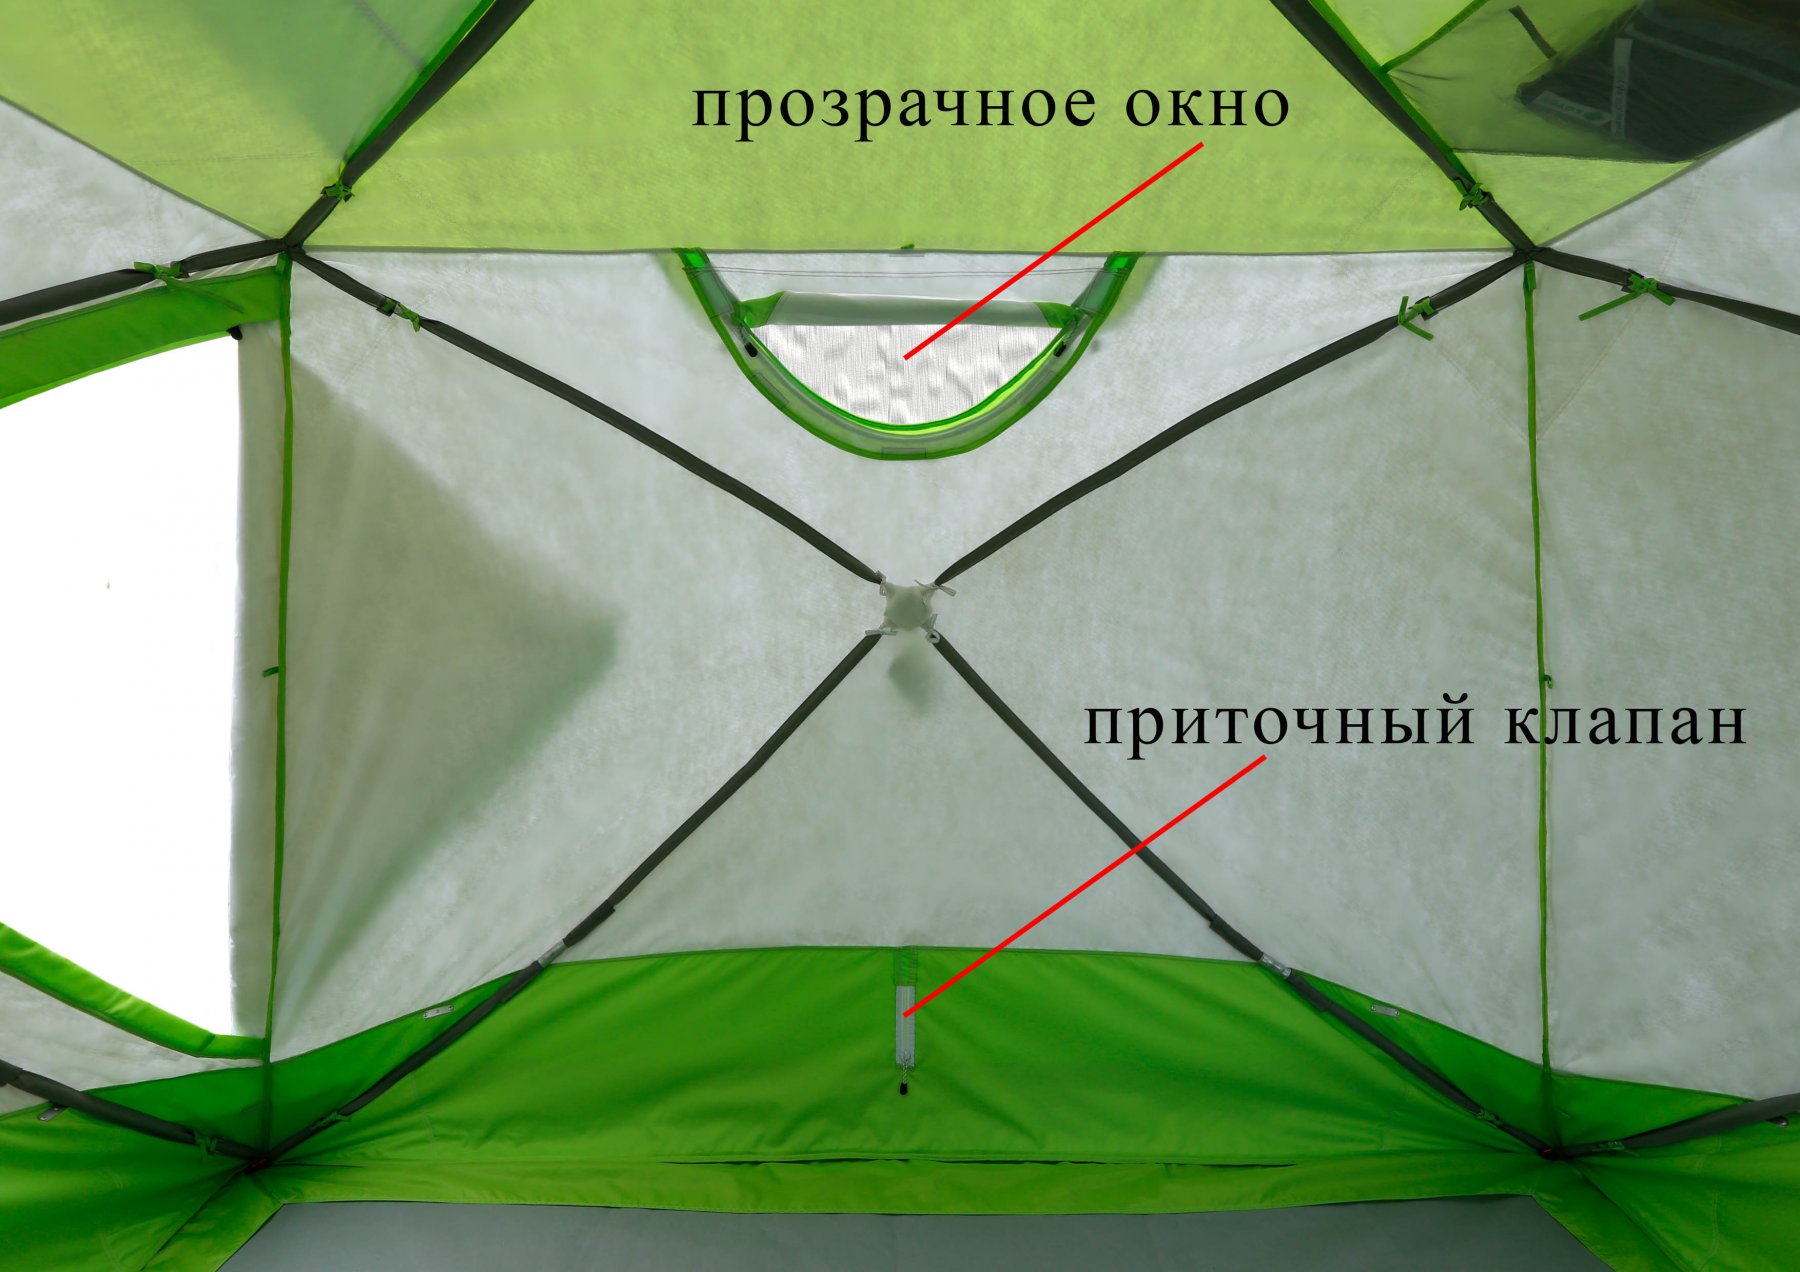 Палатка Лотос Куб 4 Компакт